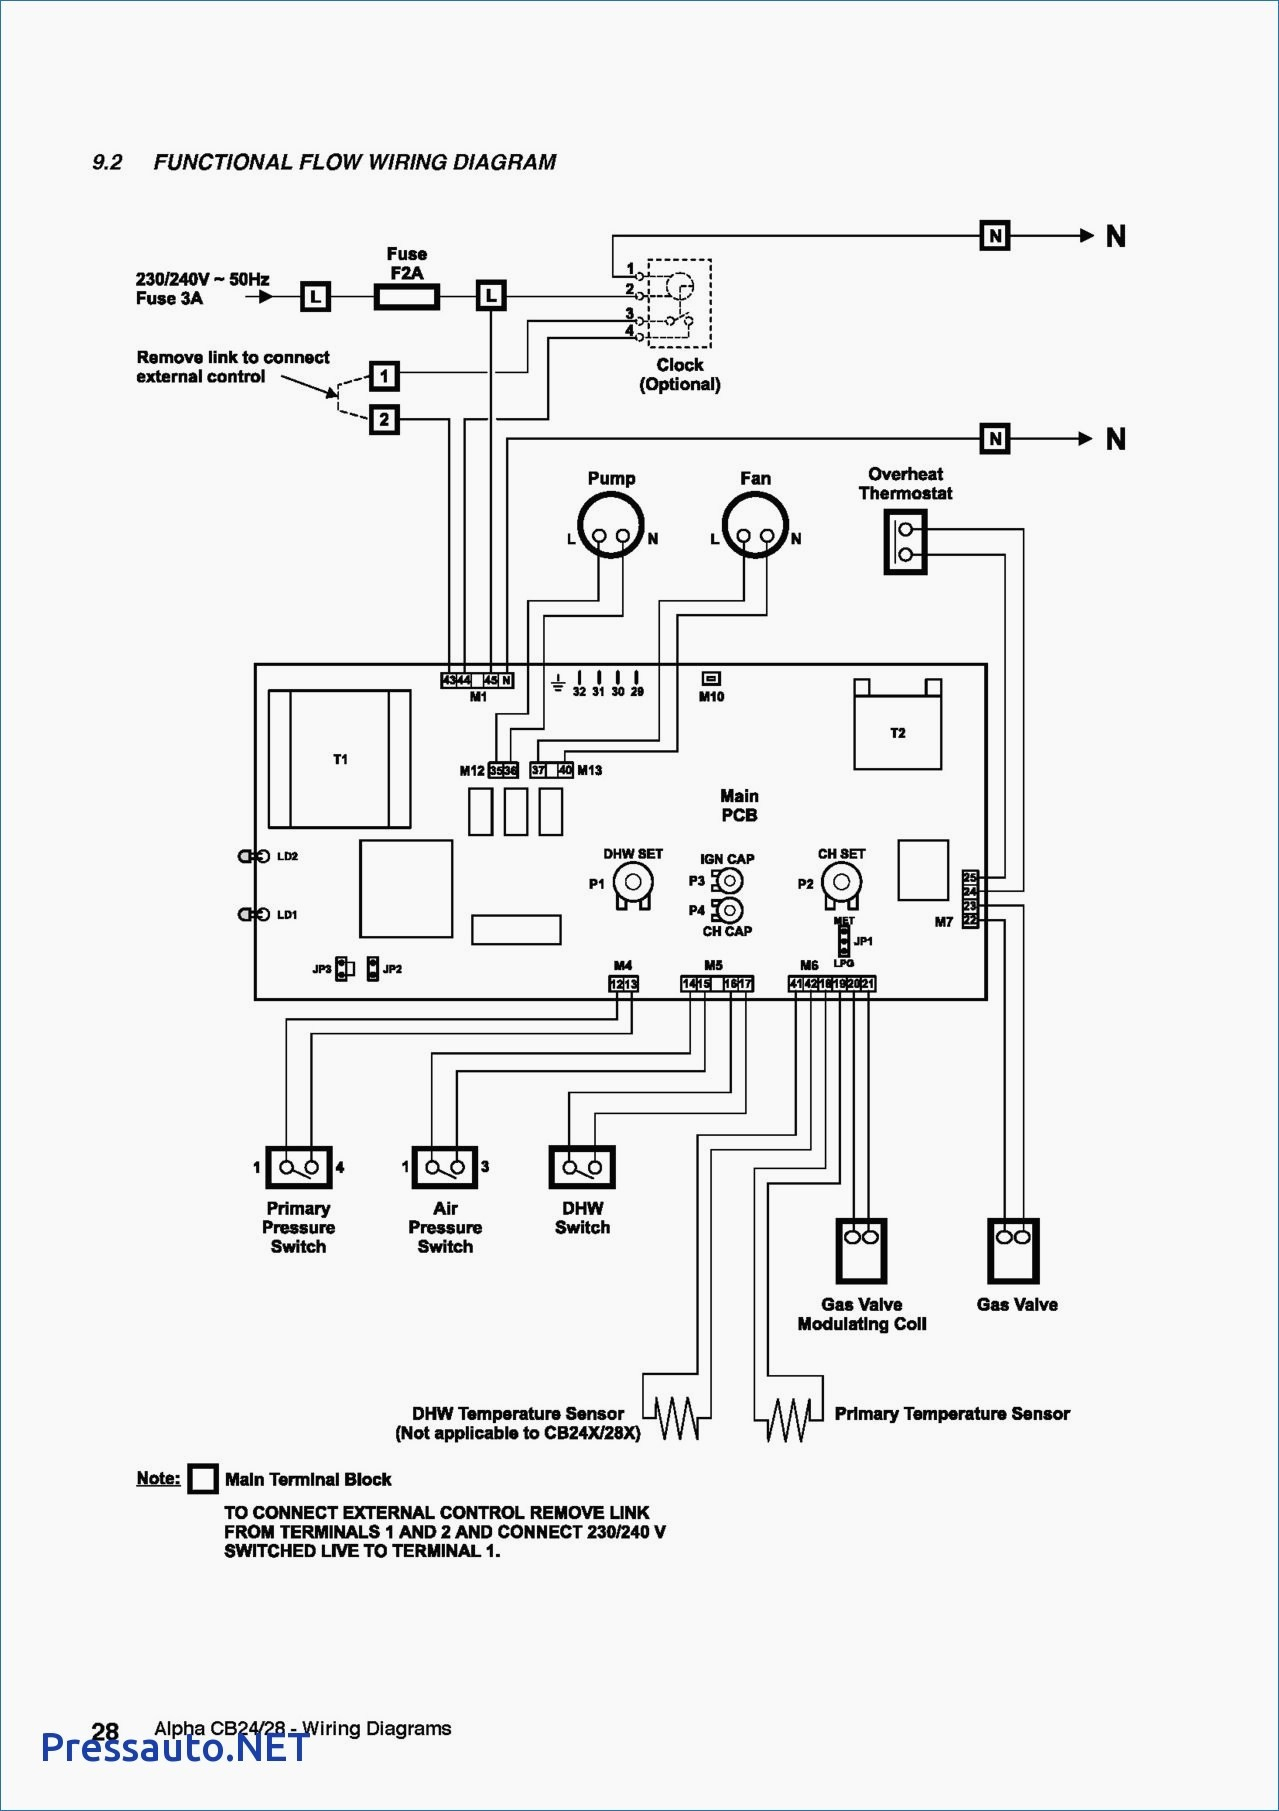 White Rodgers Gas Valve Wiring Diagram | Wiring Library - White Rodgers Gas Valve Wiring Diagram